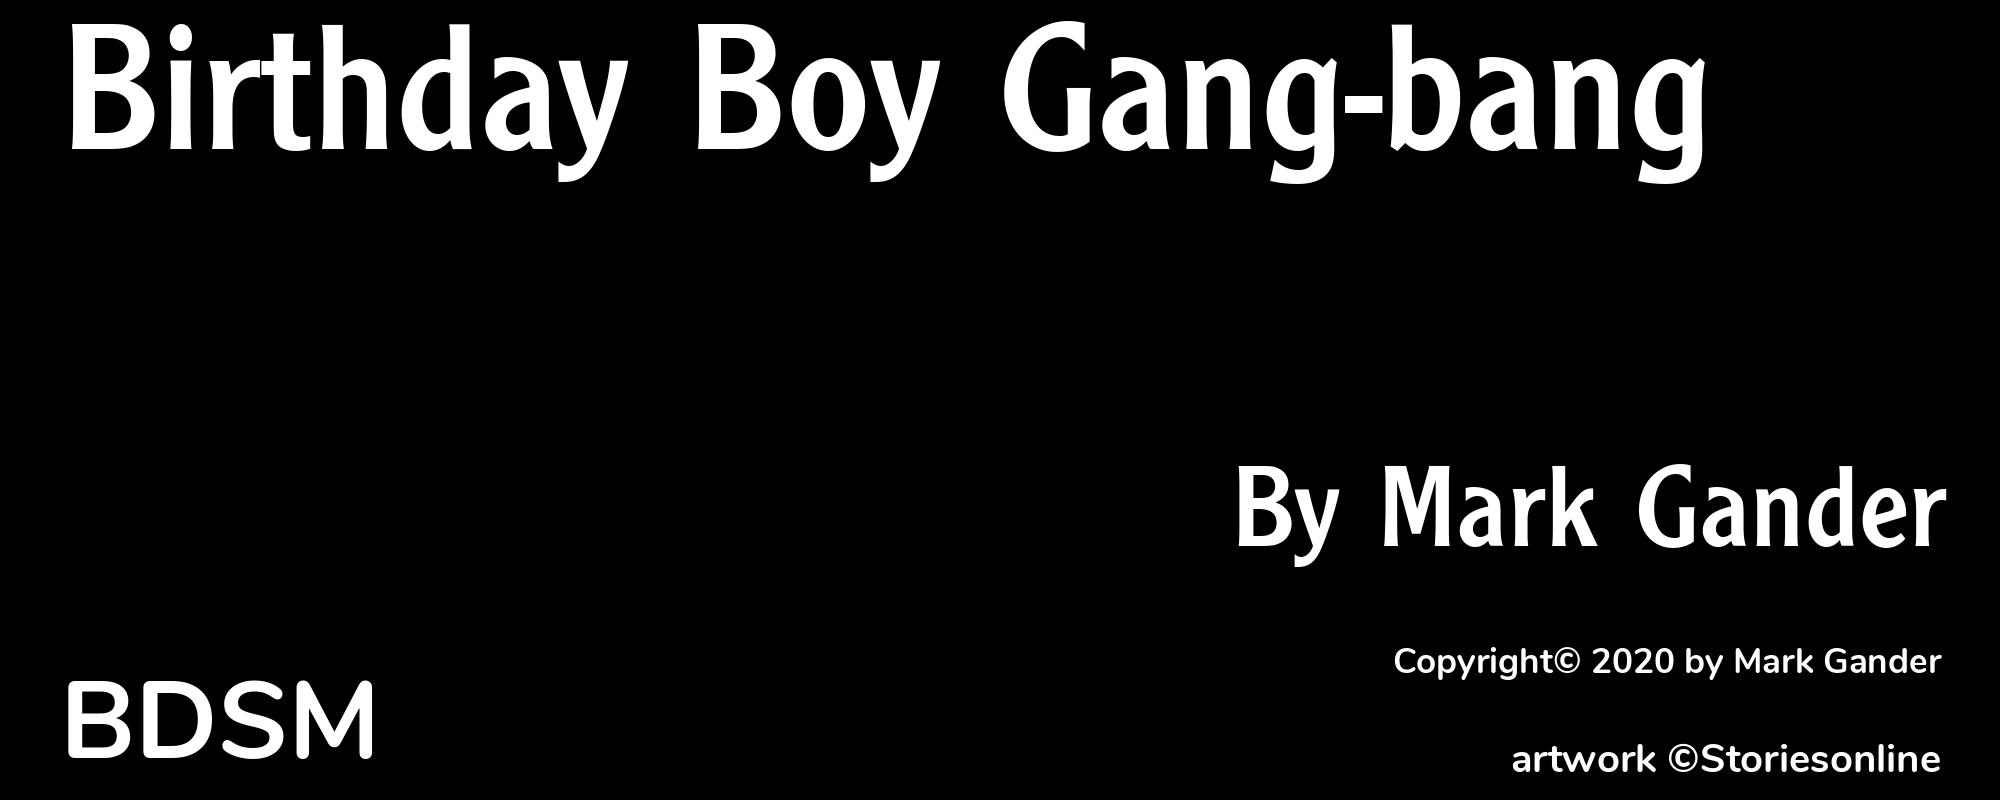 Birthday Boy Gang-bang - Cover